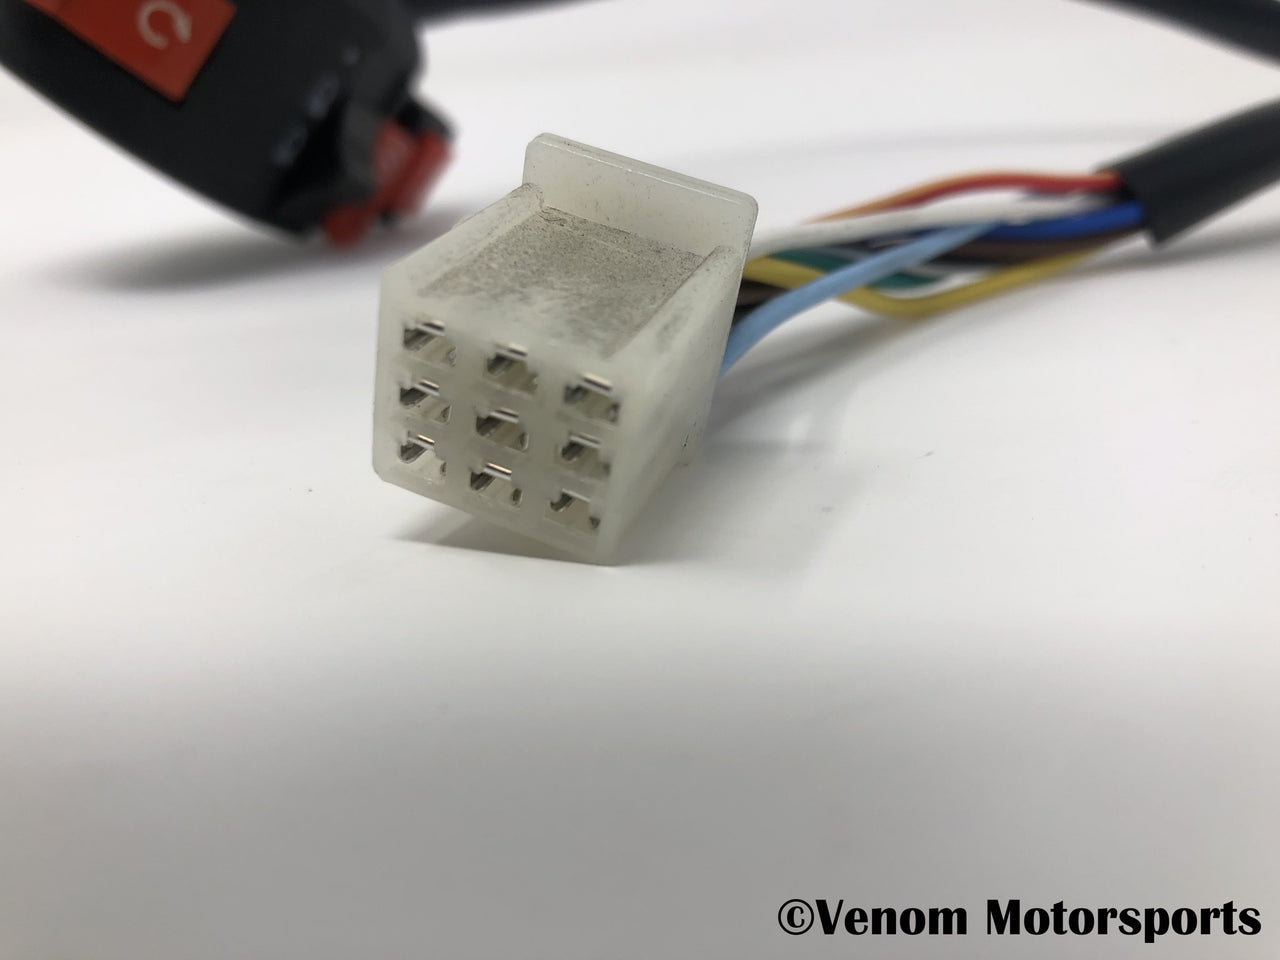 Replacement Left Side Control Switch | Venom 110cc-125cc ATVs